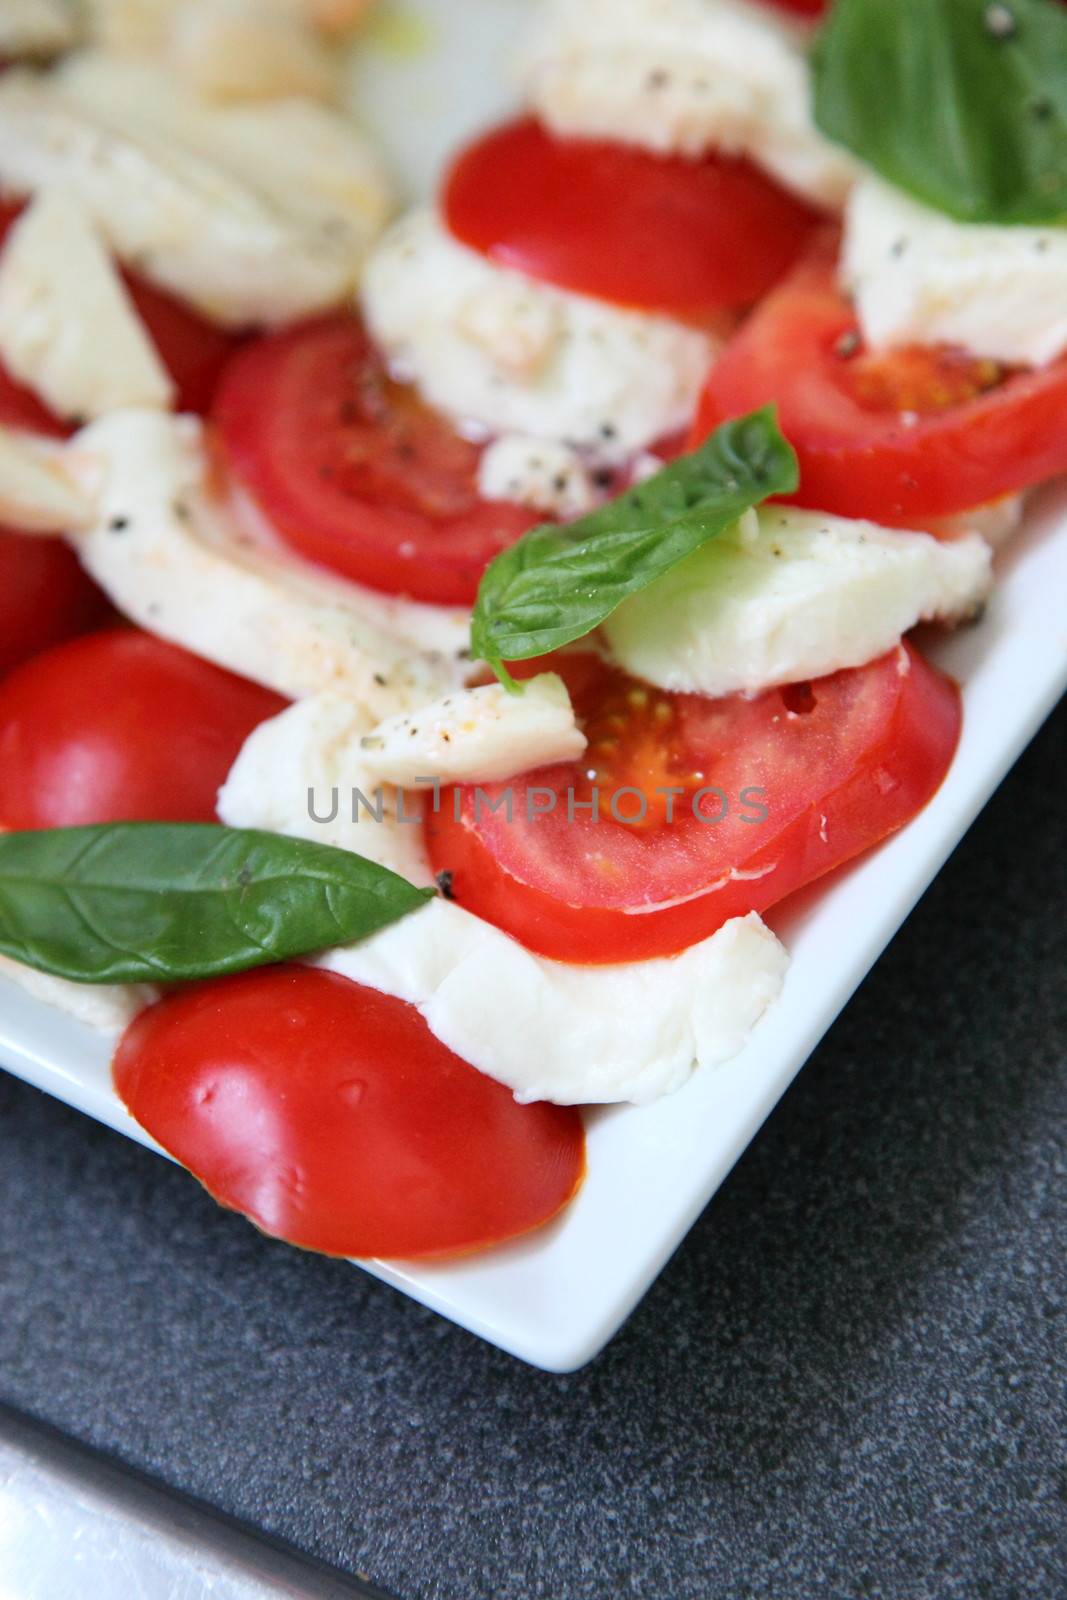 Tomatoes and mozzarella by Farina6000